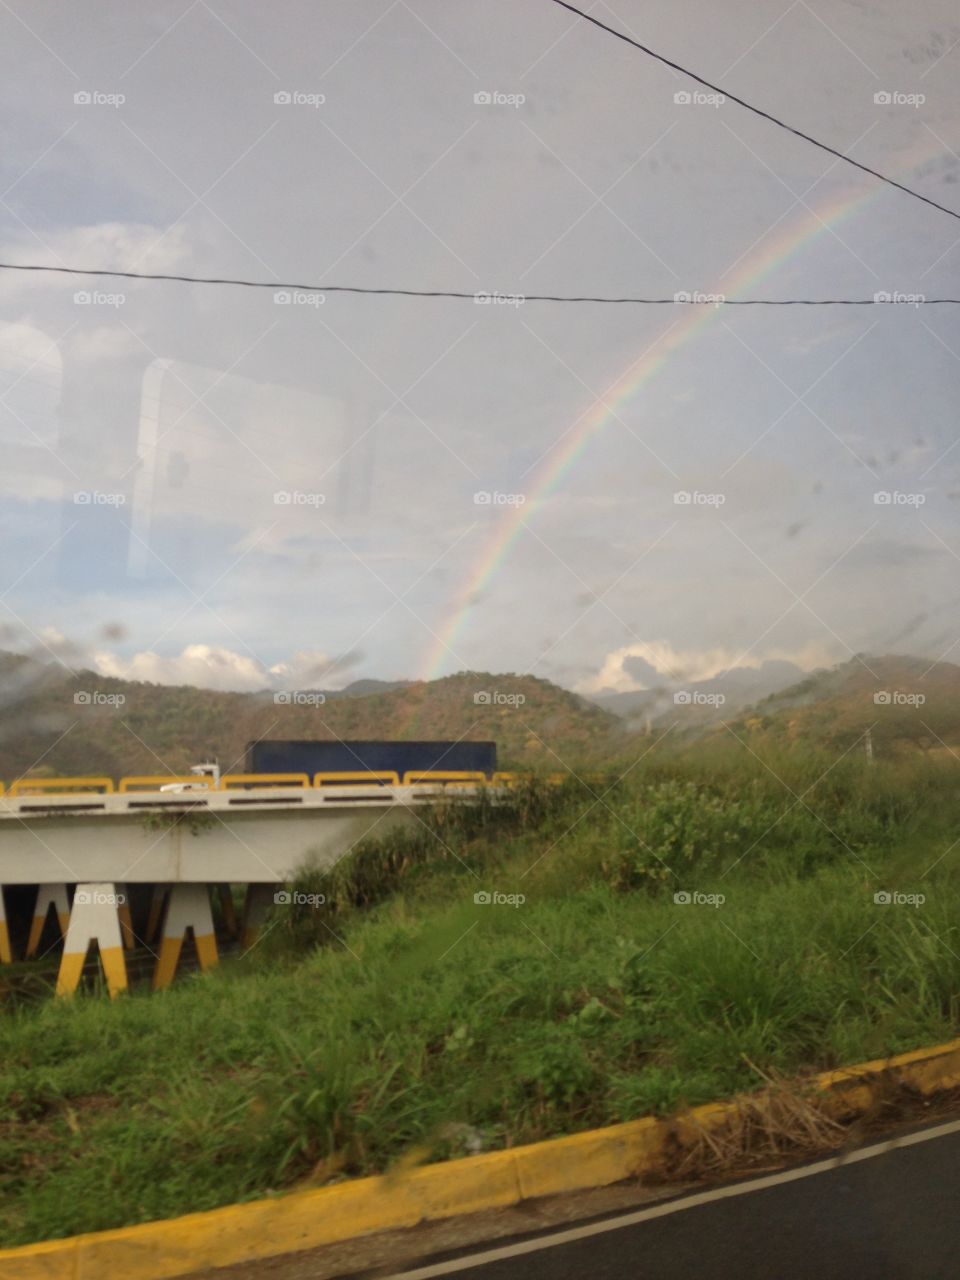 #lluvia #arcoiris #lavictoria #viaje #autopista #carretera #via